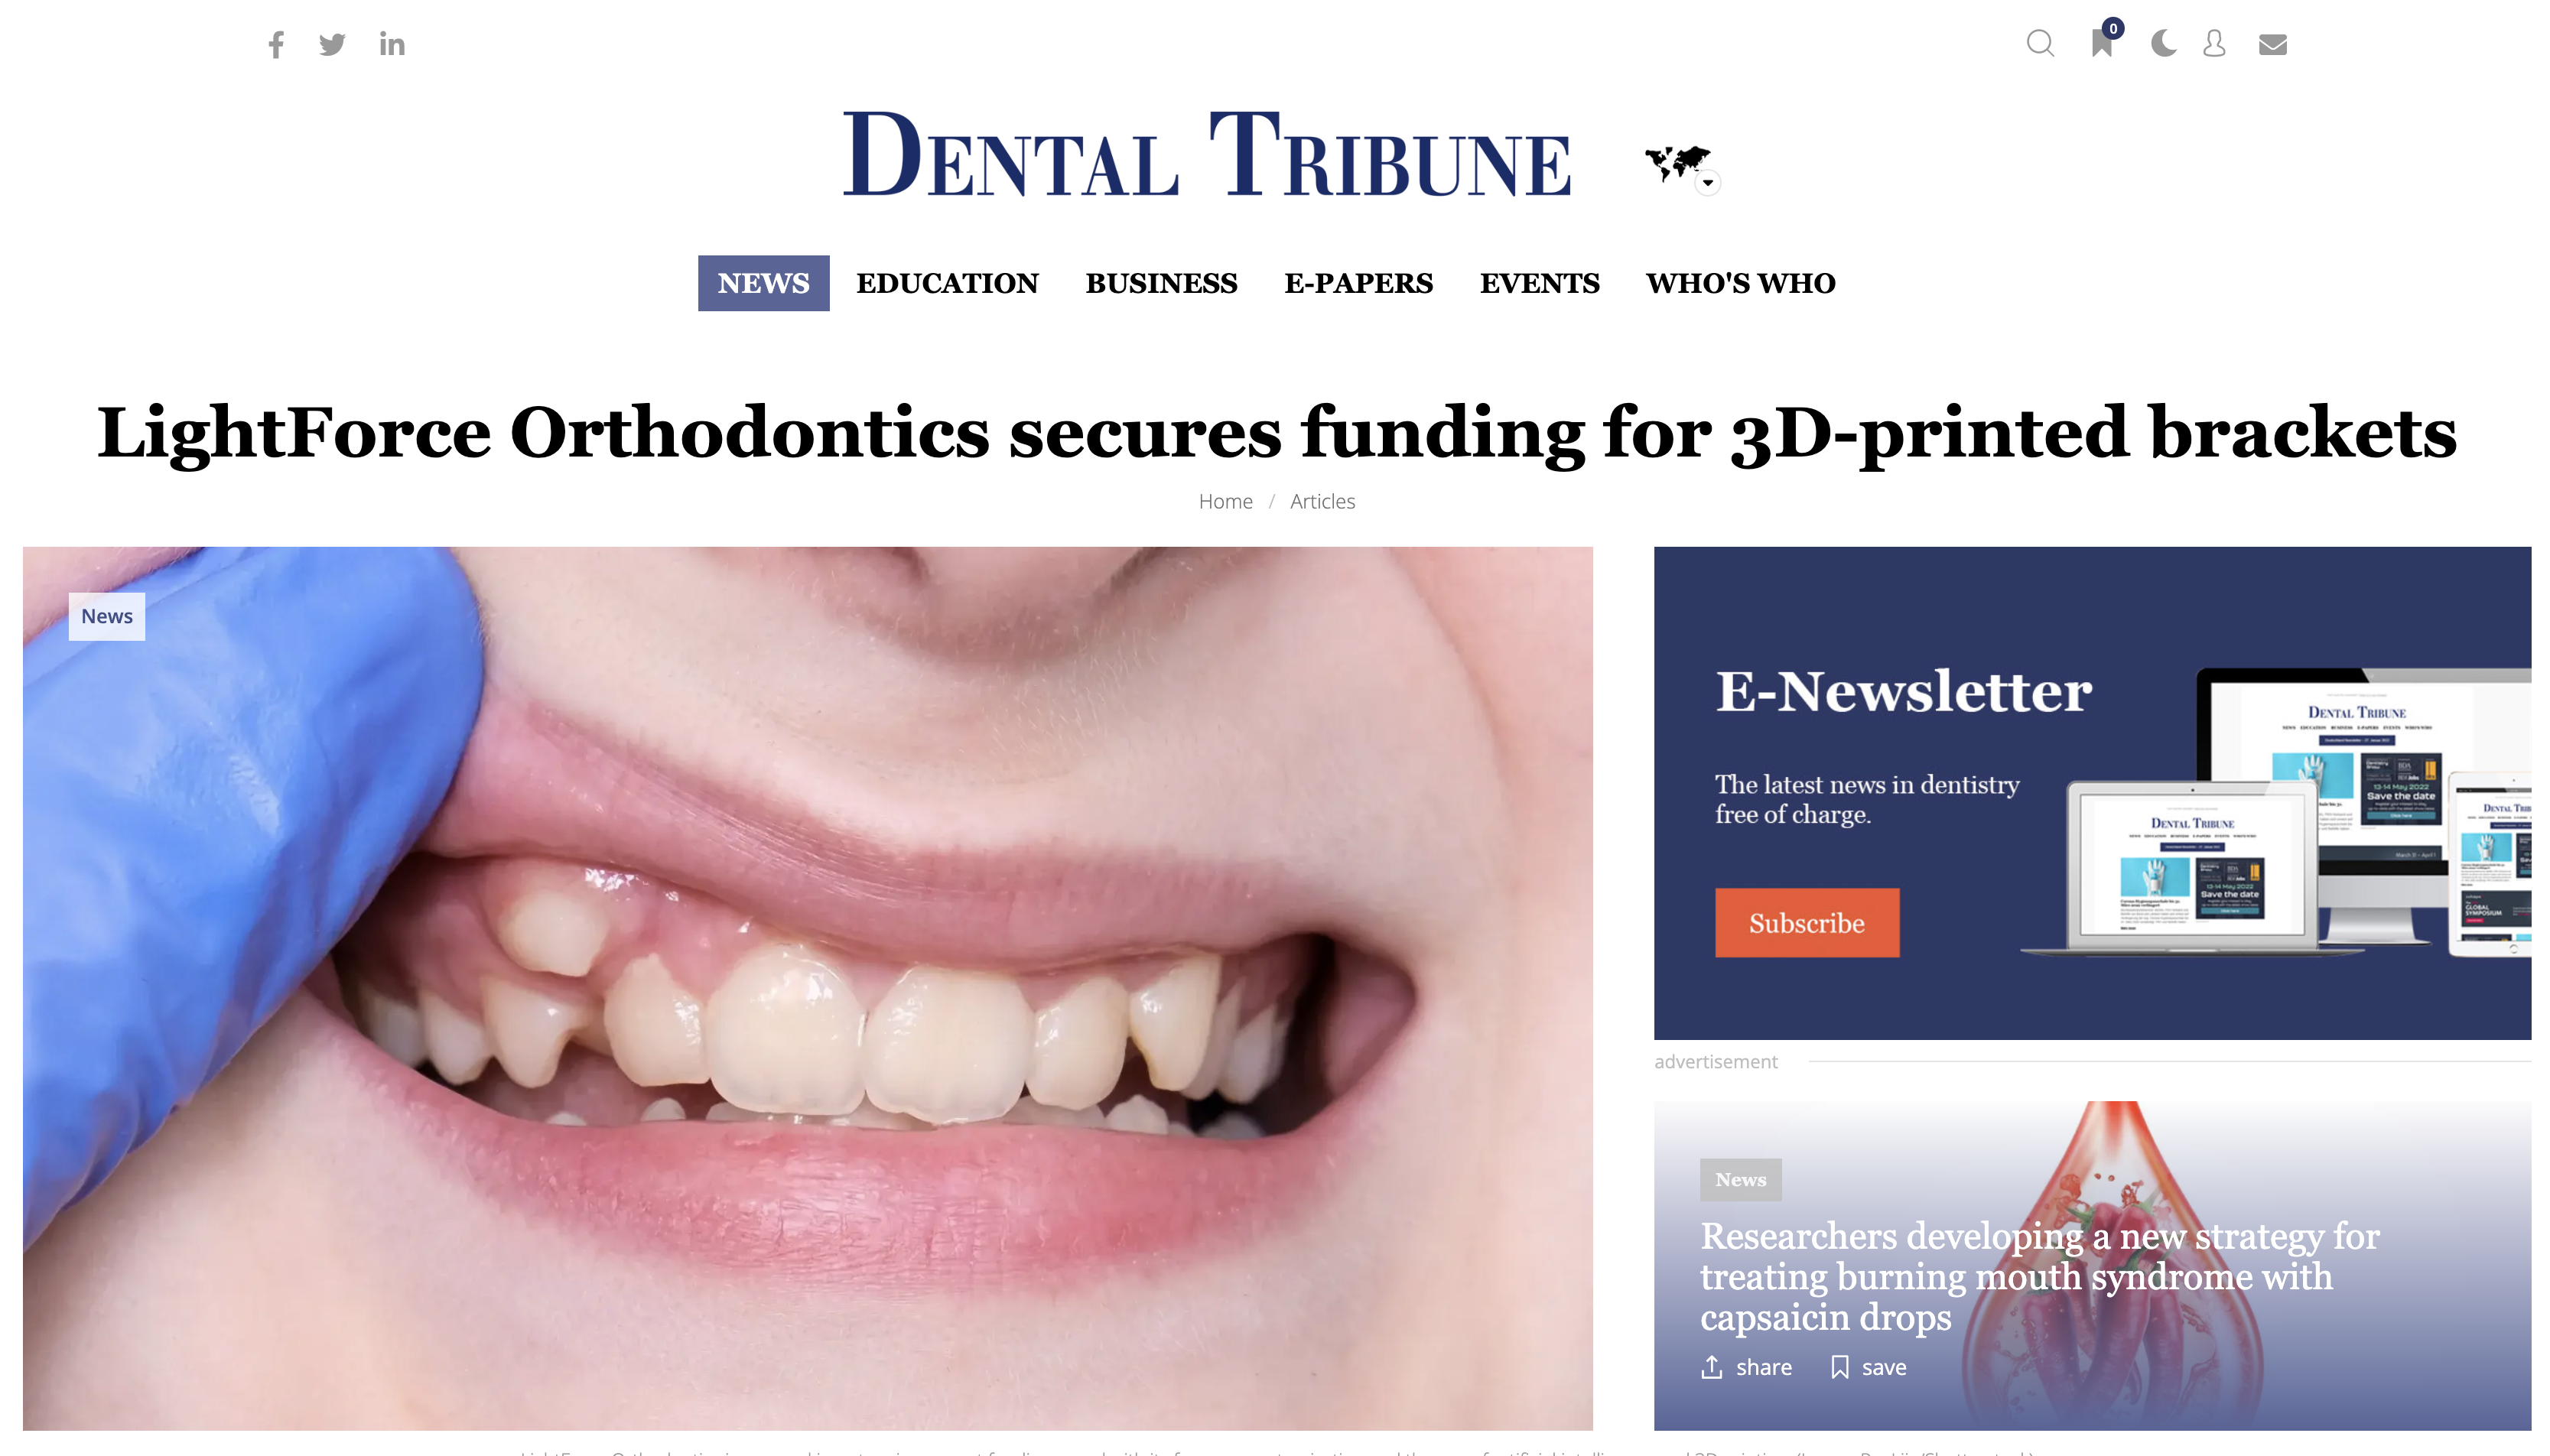 Lightforce Dental Tribune